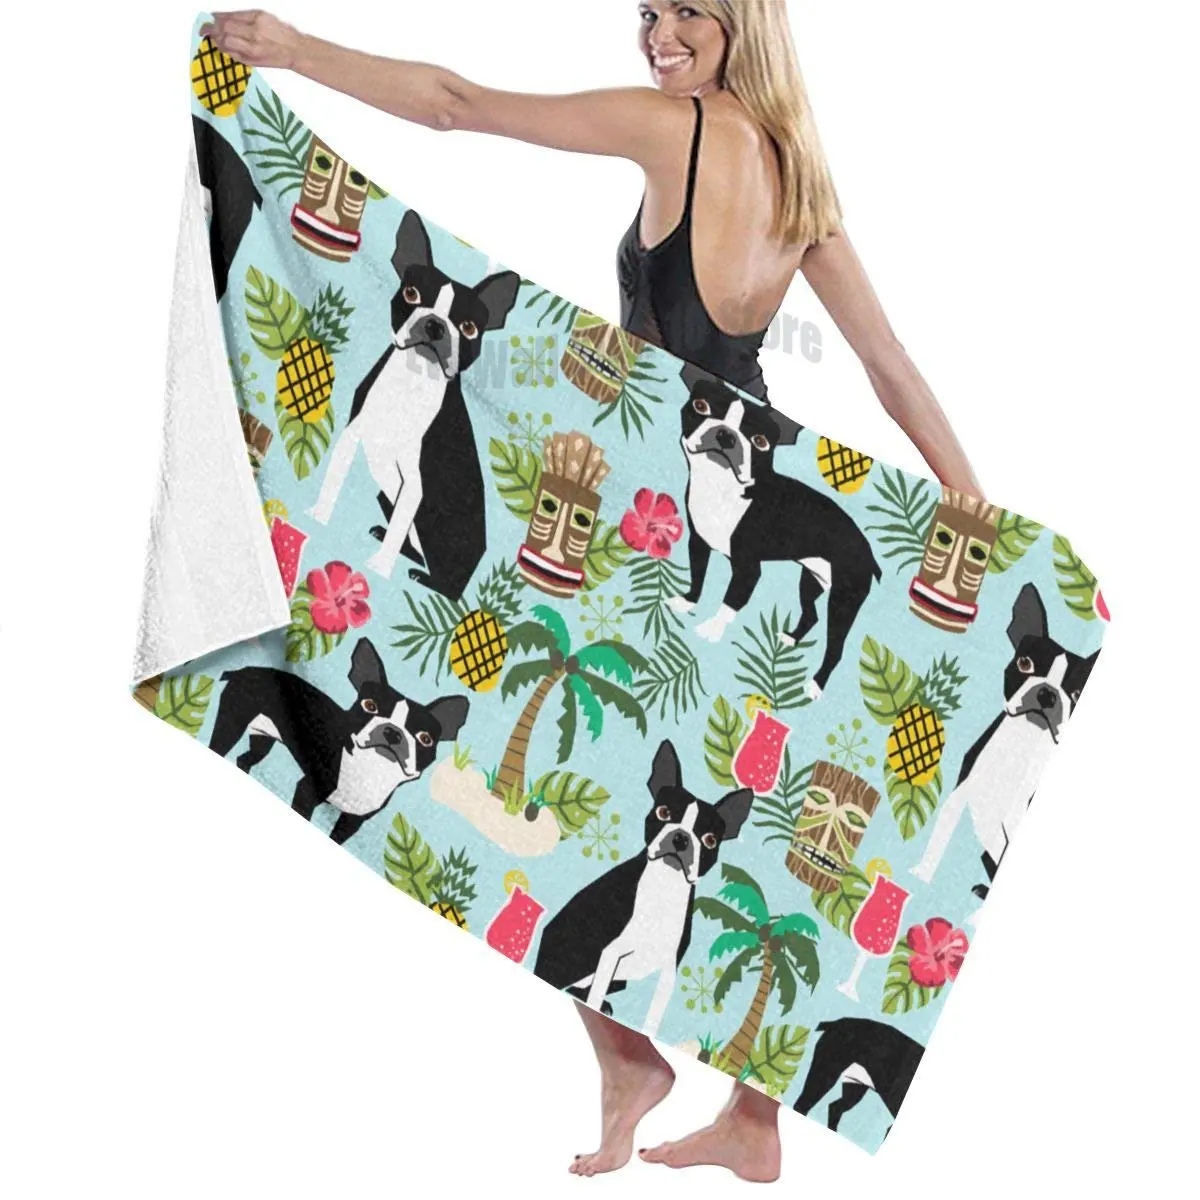 

Boston Terrier Tiki Beach Towel Sand Free Microfiber Beach Towels BlanketQuick Dry Super Absorbent Lightweight Thin Towel